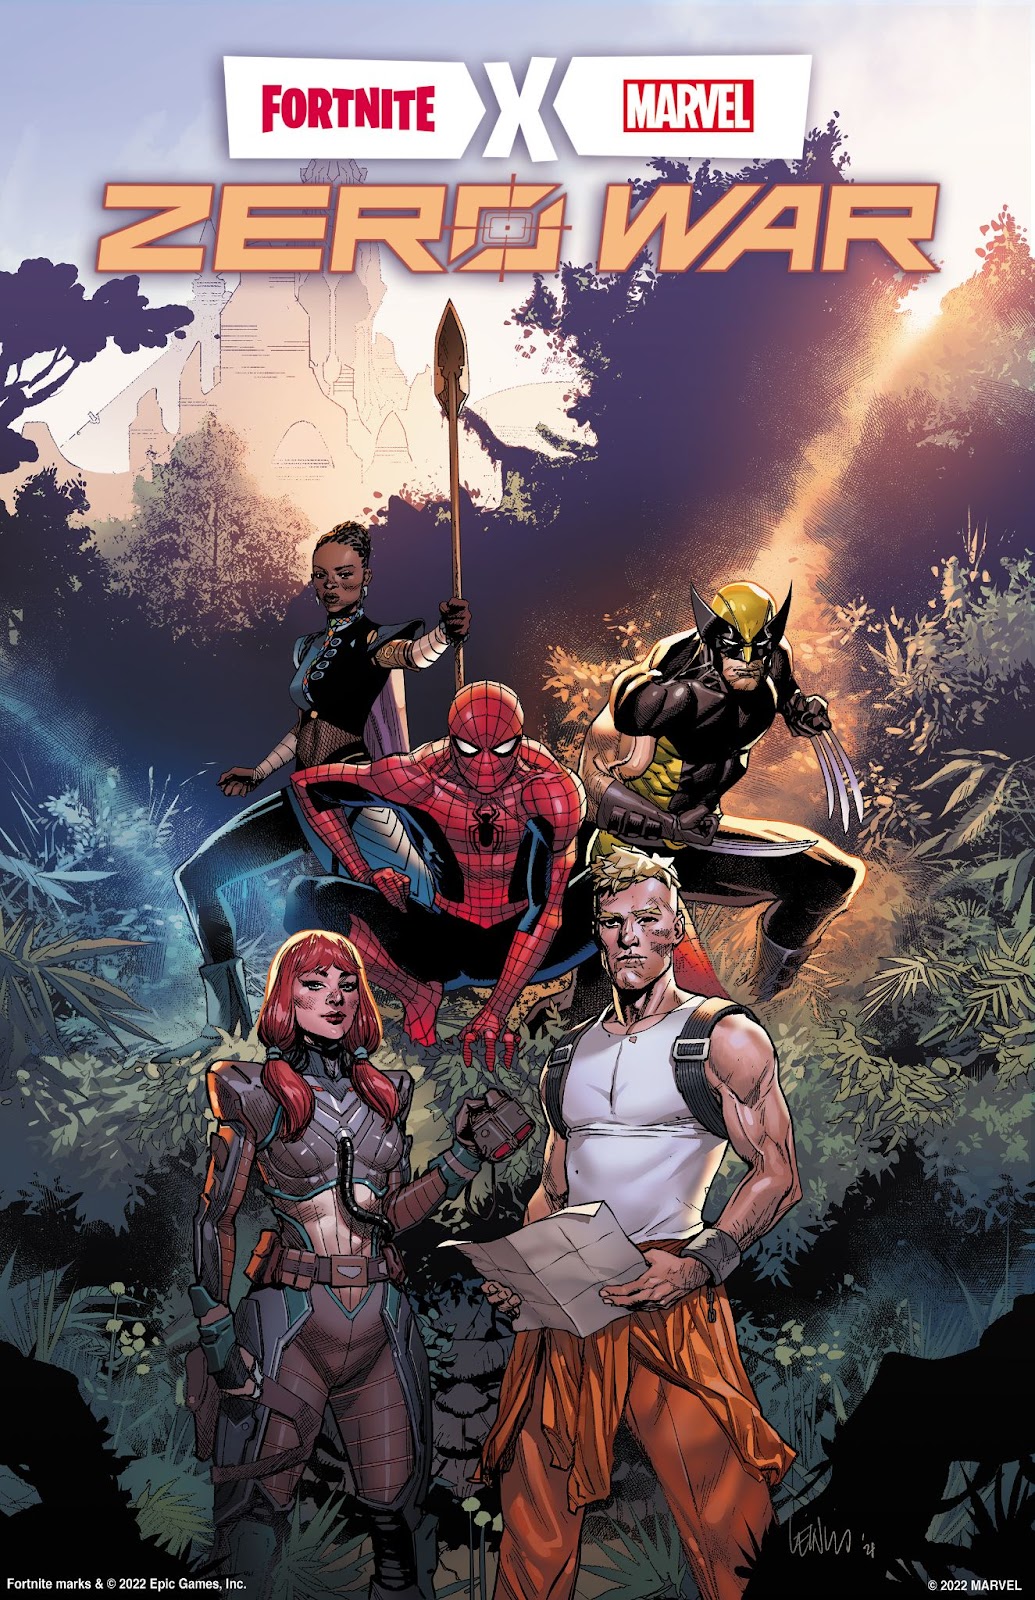 “Fortnite x Marvel: Zero War Vol. 1''